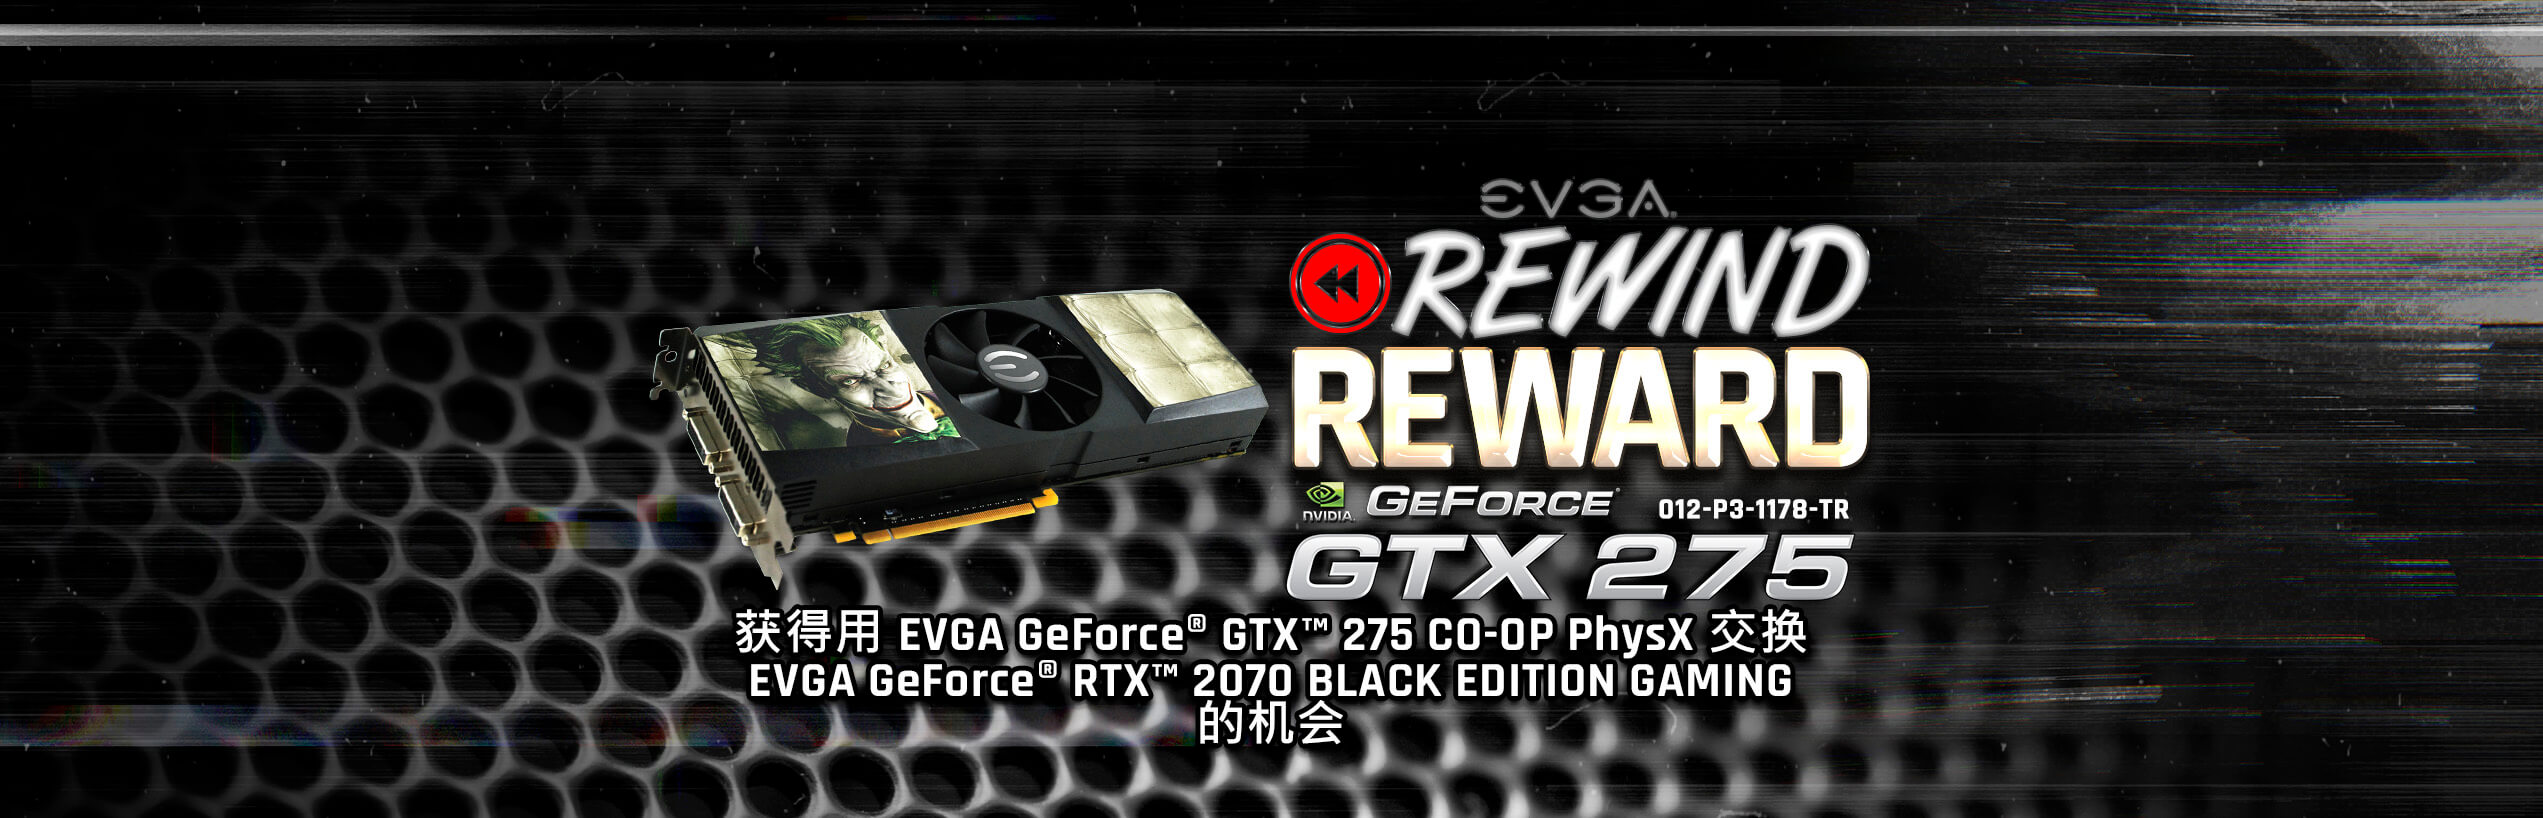 用 EVGA GeForce GTX 275 CO-OP PhysX 换 EVGA GeForce RTX 2070 XC BLACK